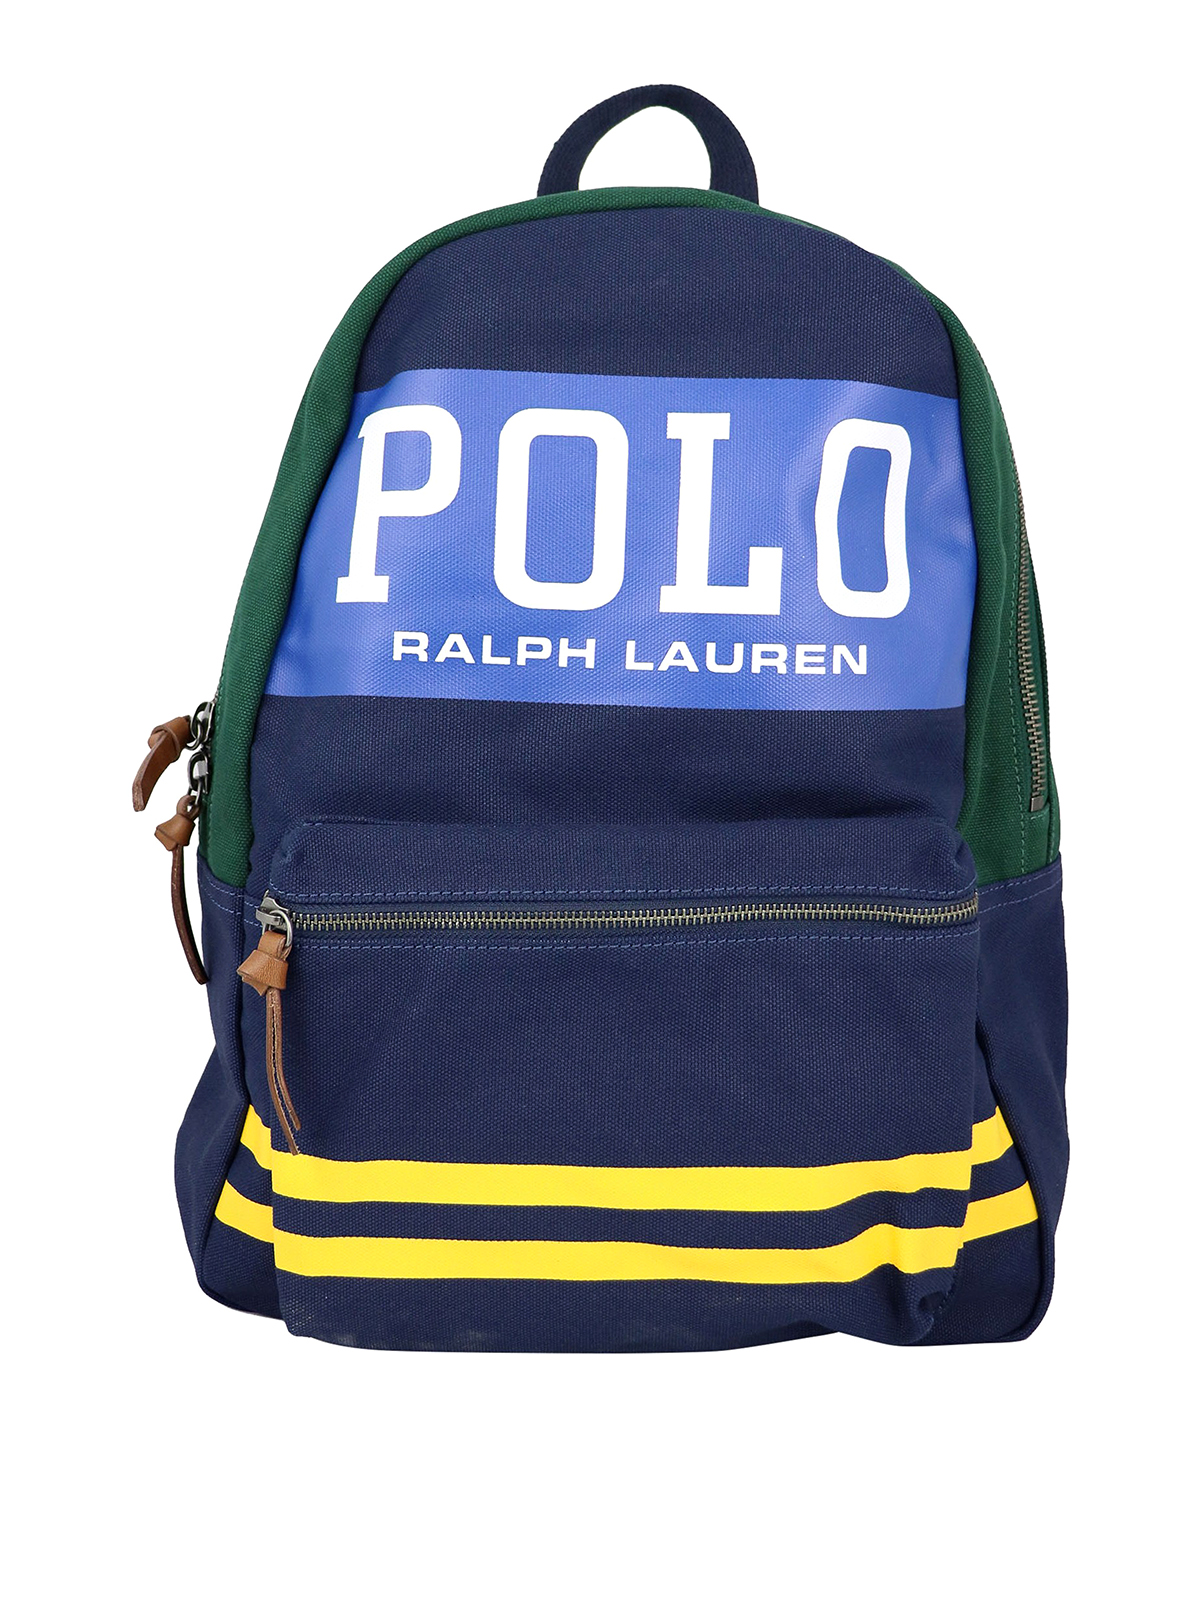 Backpacks Polo Ralph Lauren - Polo canvas backpack - 513008 